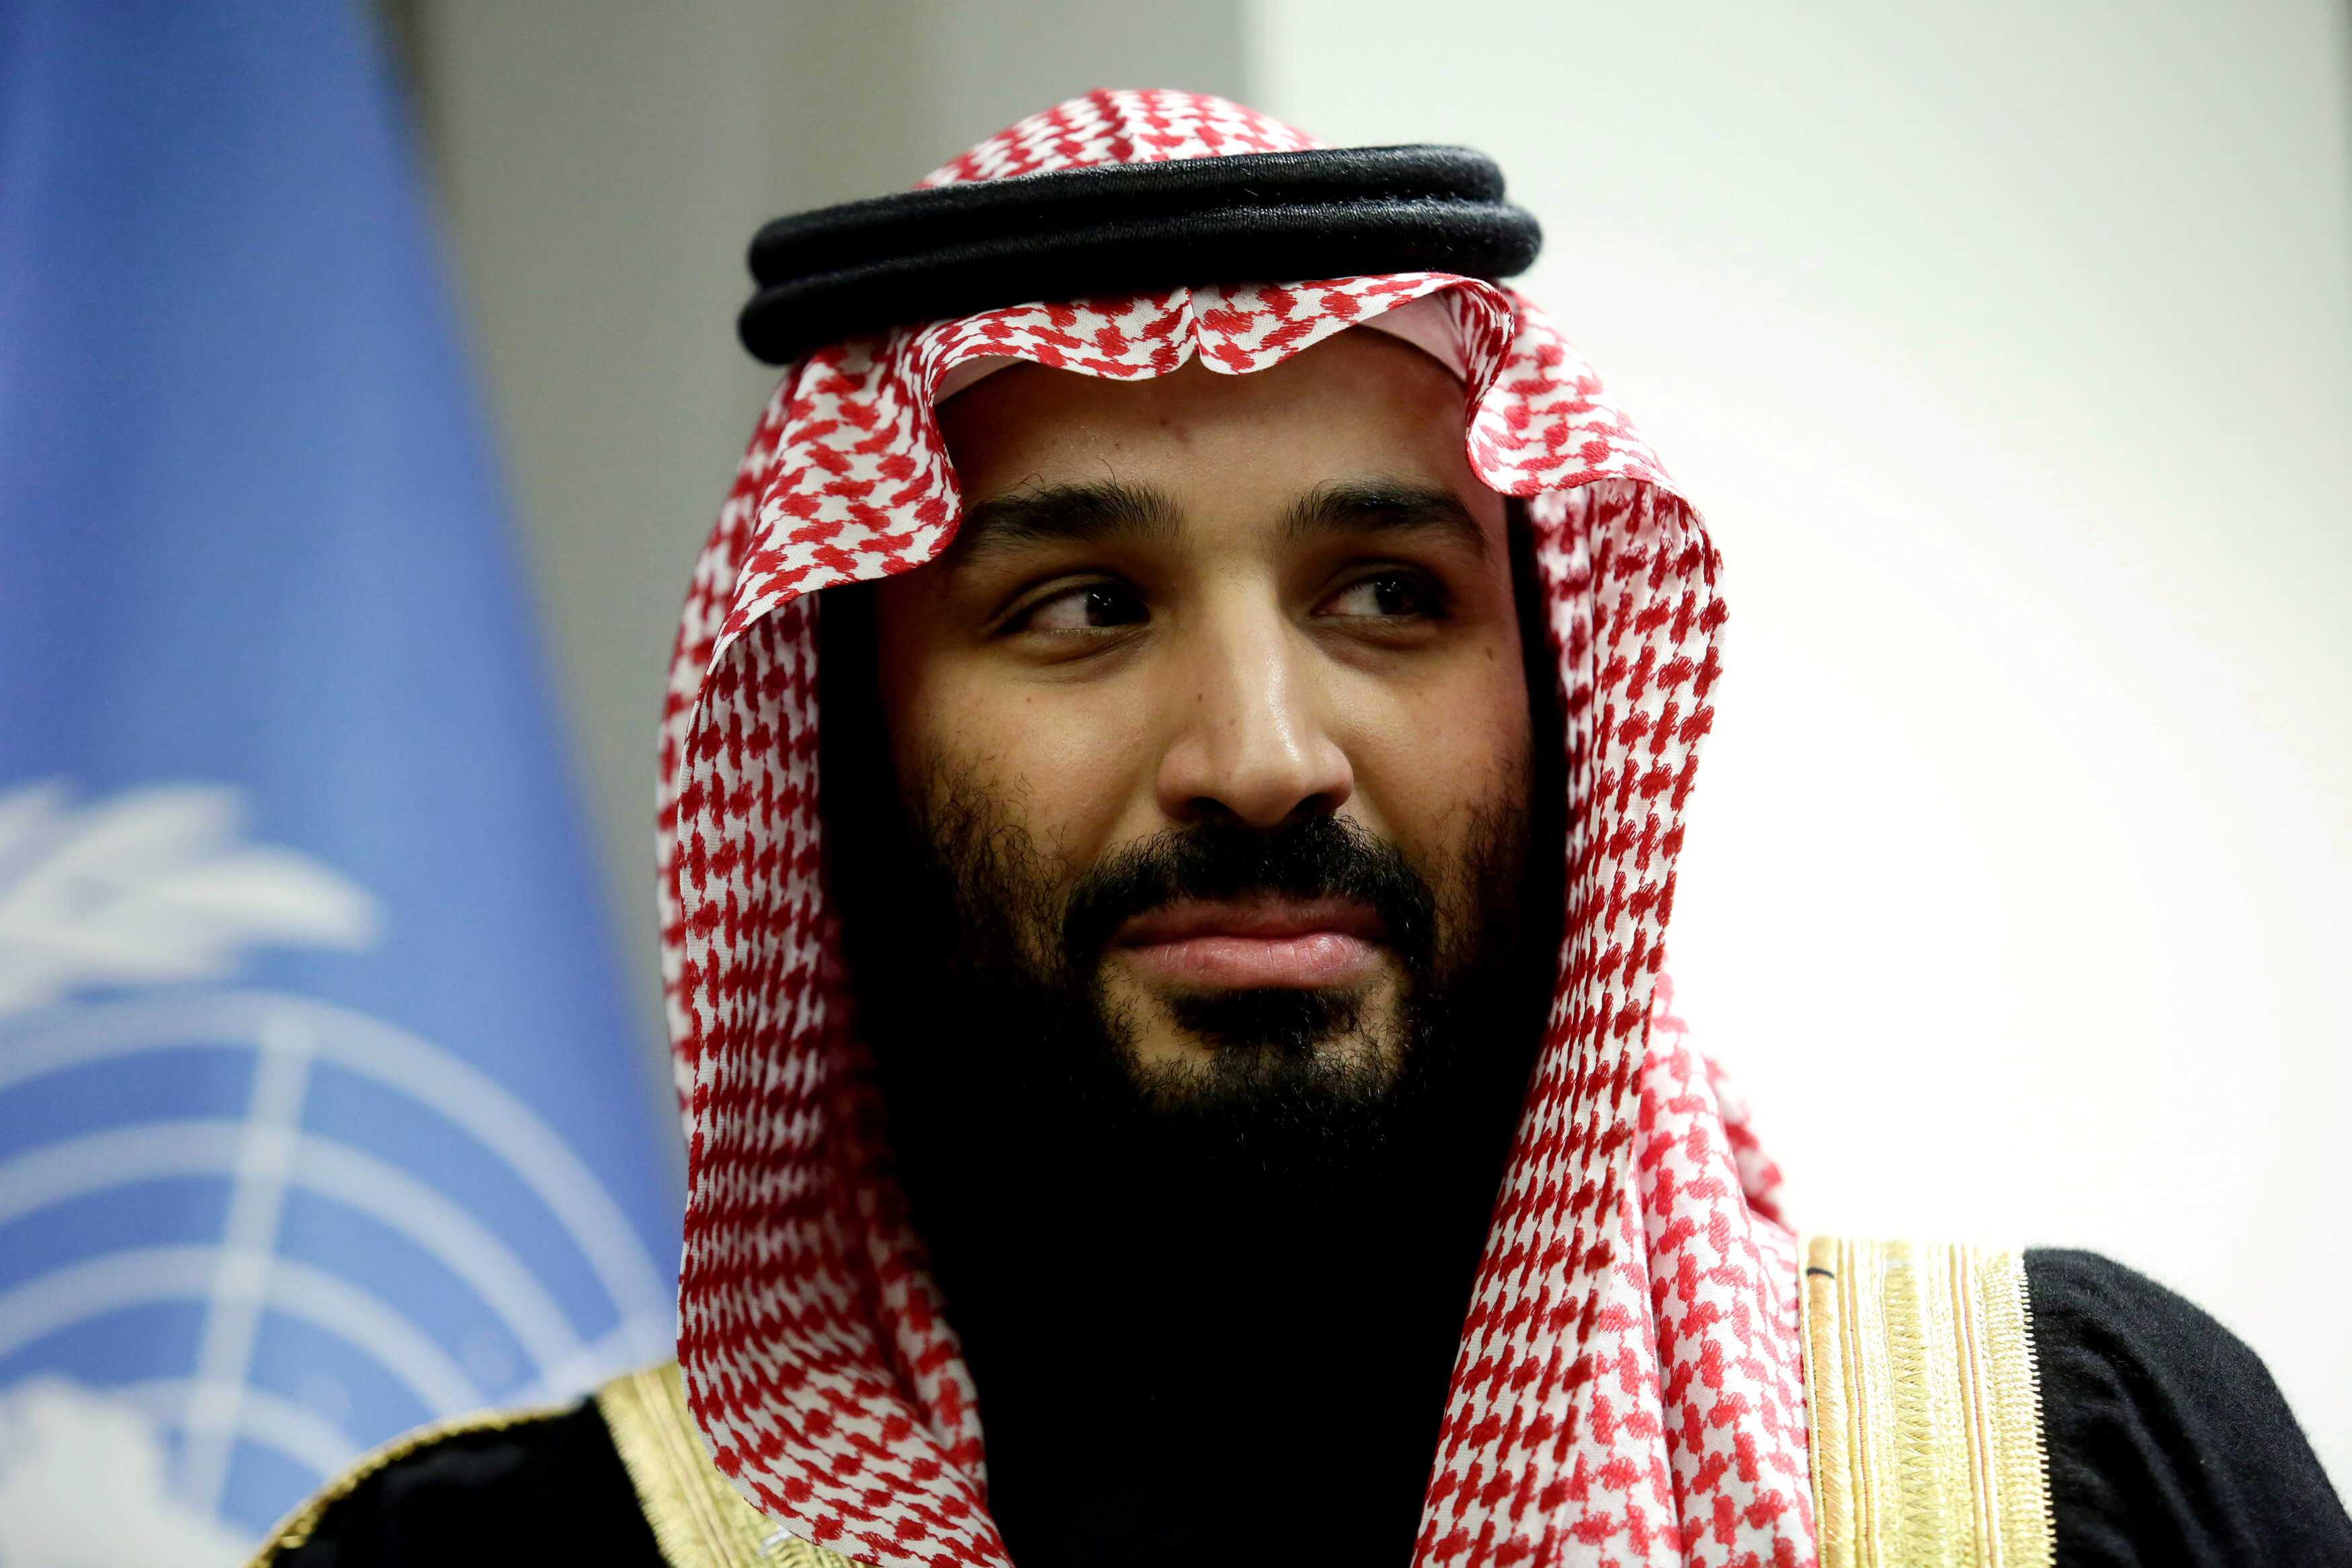 Príncipe saudí ordenó asesinar al periodista Khashoggi: CIA